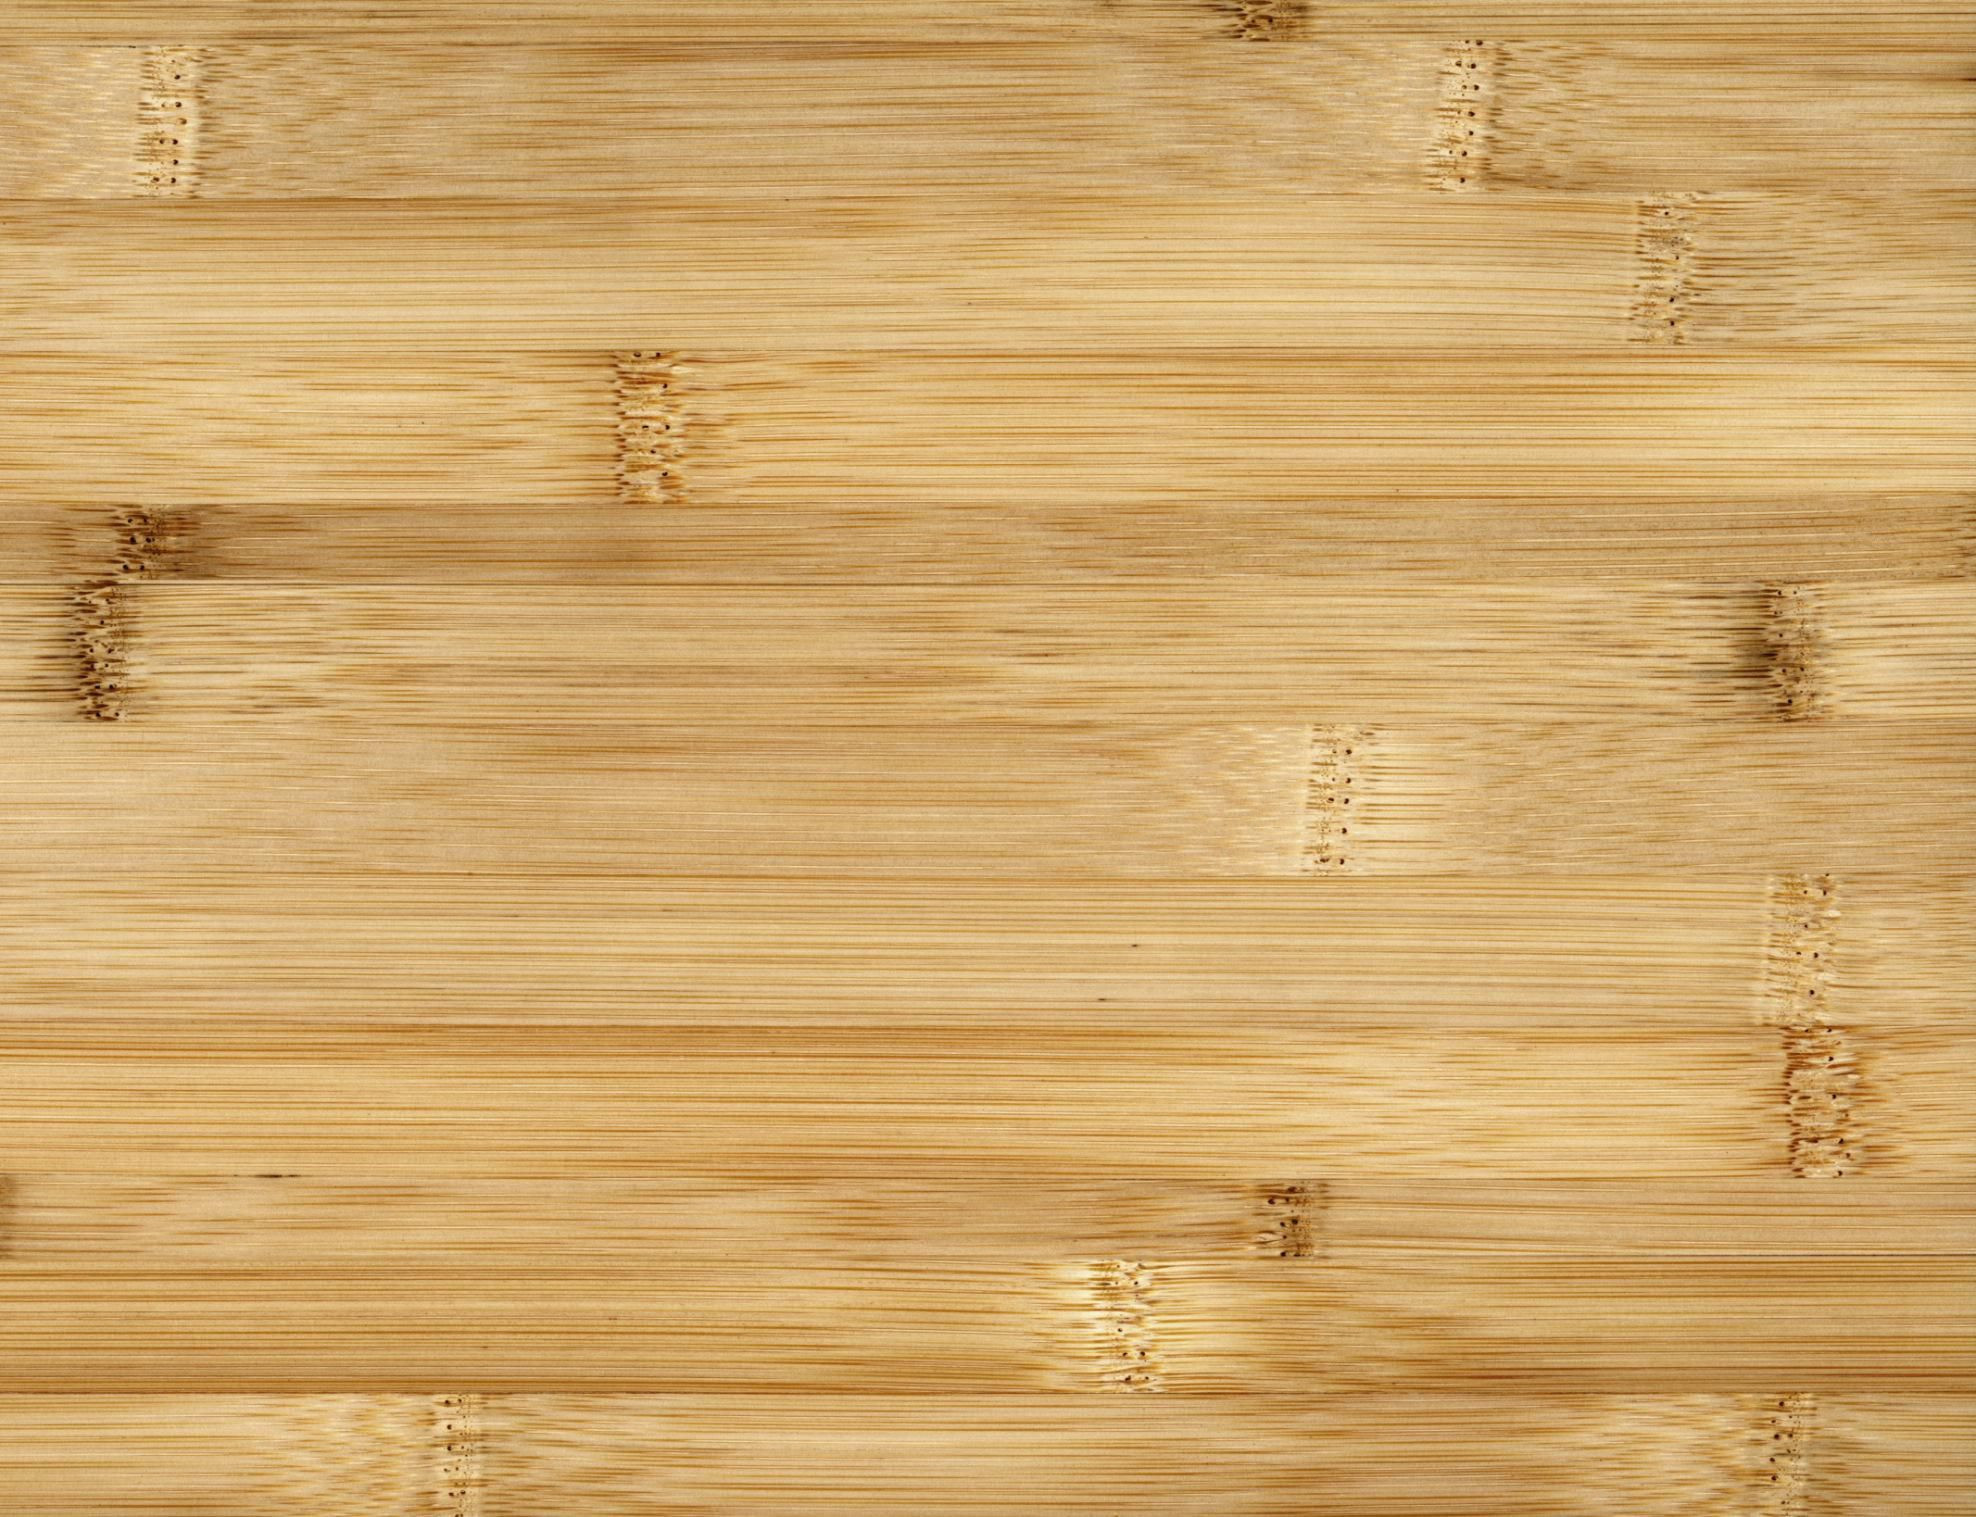 12 Elegant Hardwood Floor Cleaner Pet Safe 2024 free download hardwood floor cleaner pet safe of how to clean bamboo flooring intended for 200266305 001 56a2fd815f9b58b7d0d000cd